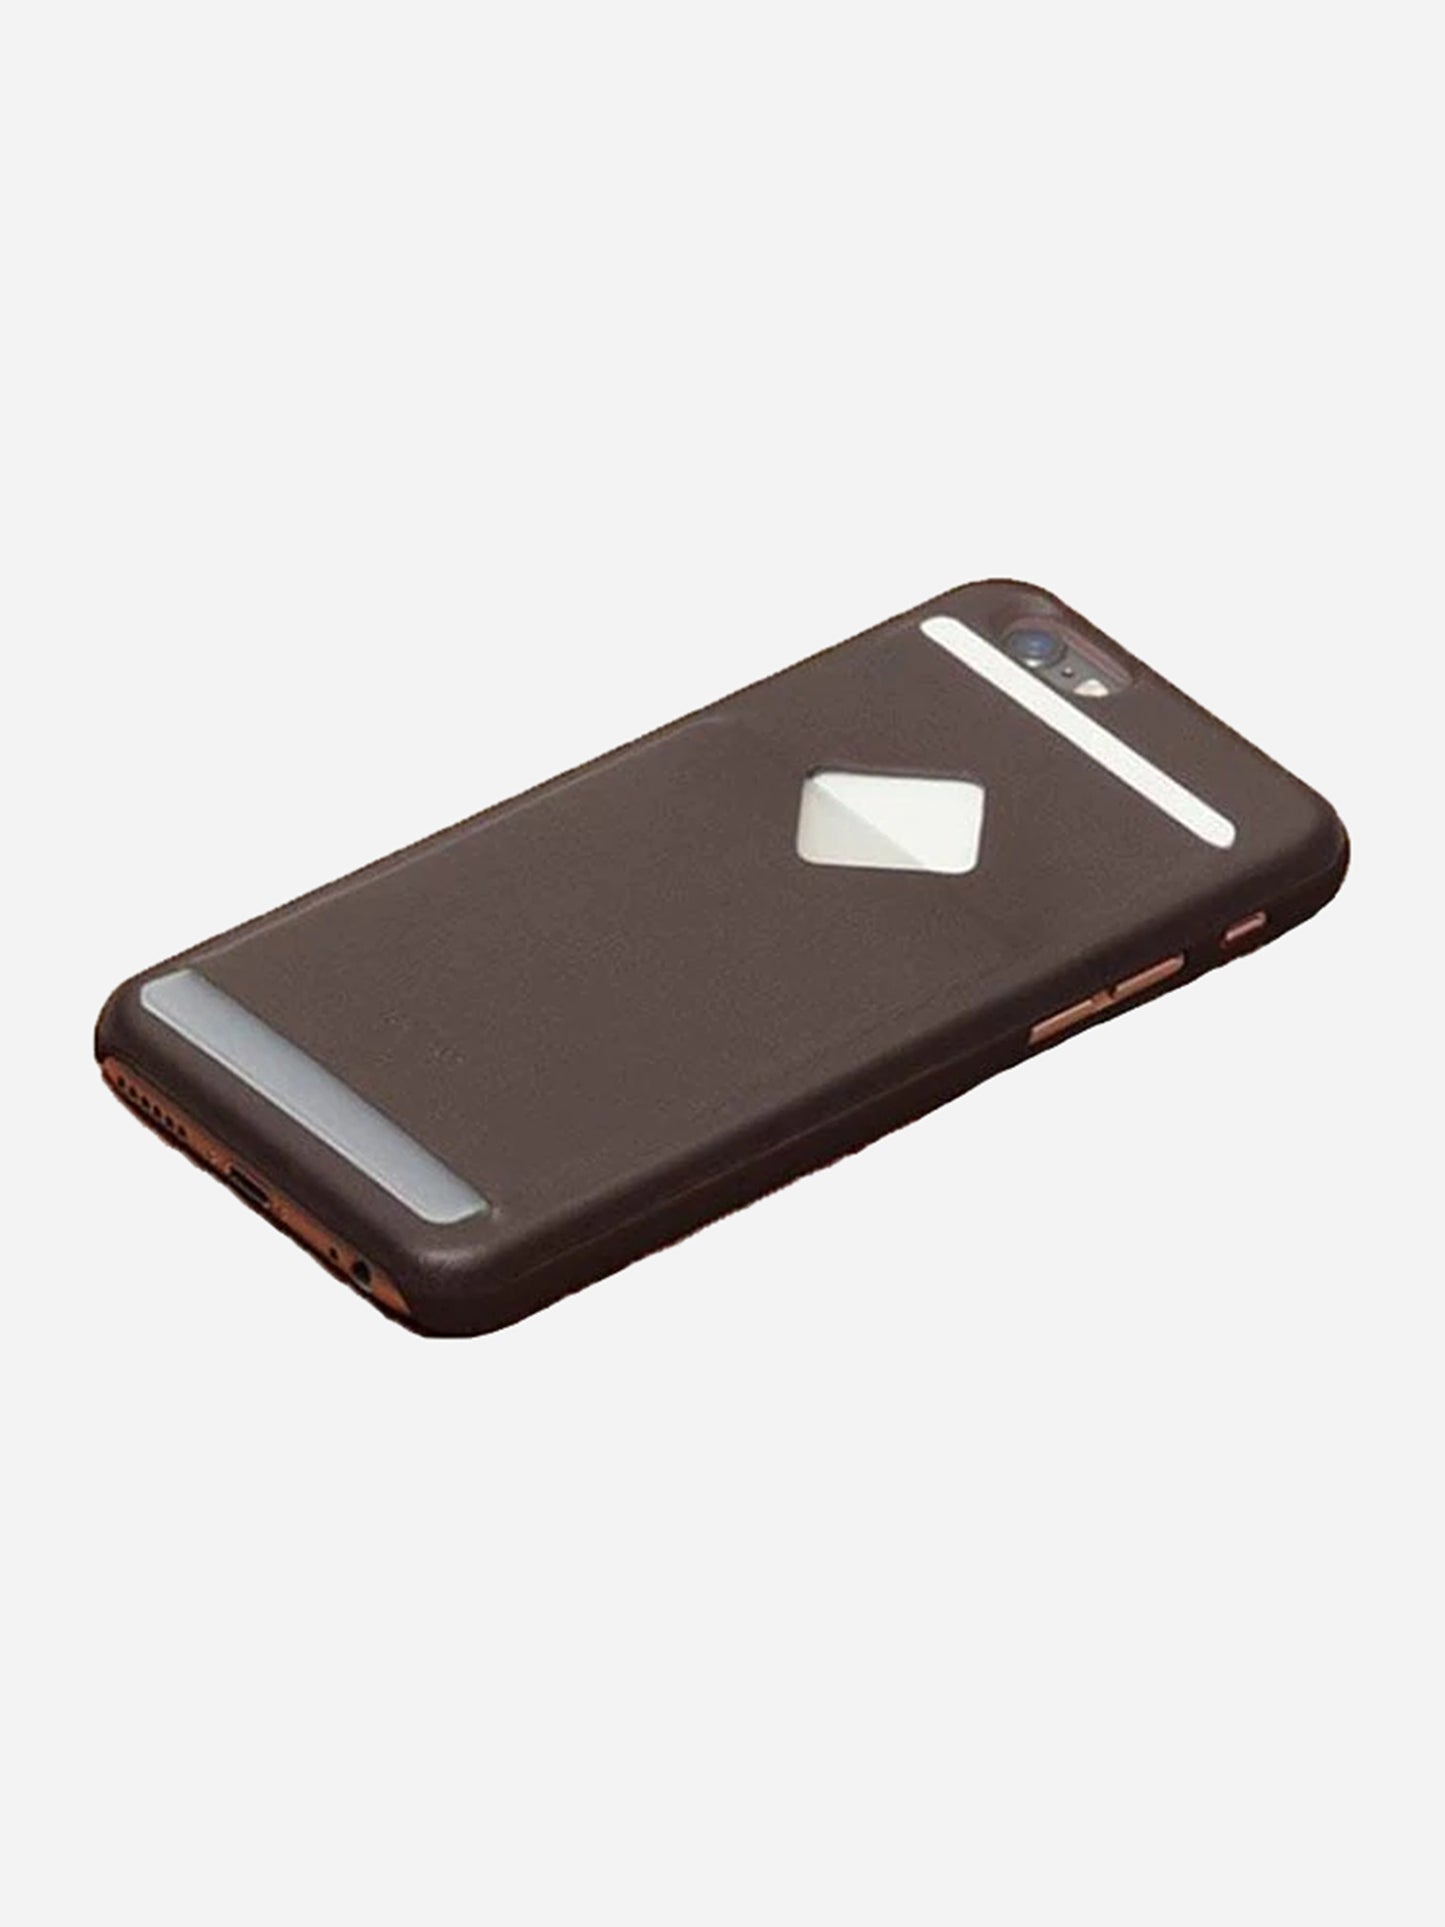 Bellroy iPhone 6S Phone Case - 3 Card Slide